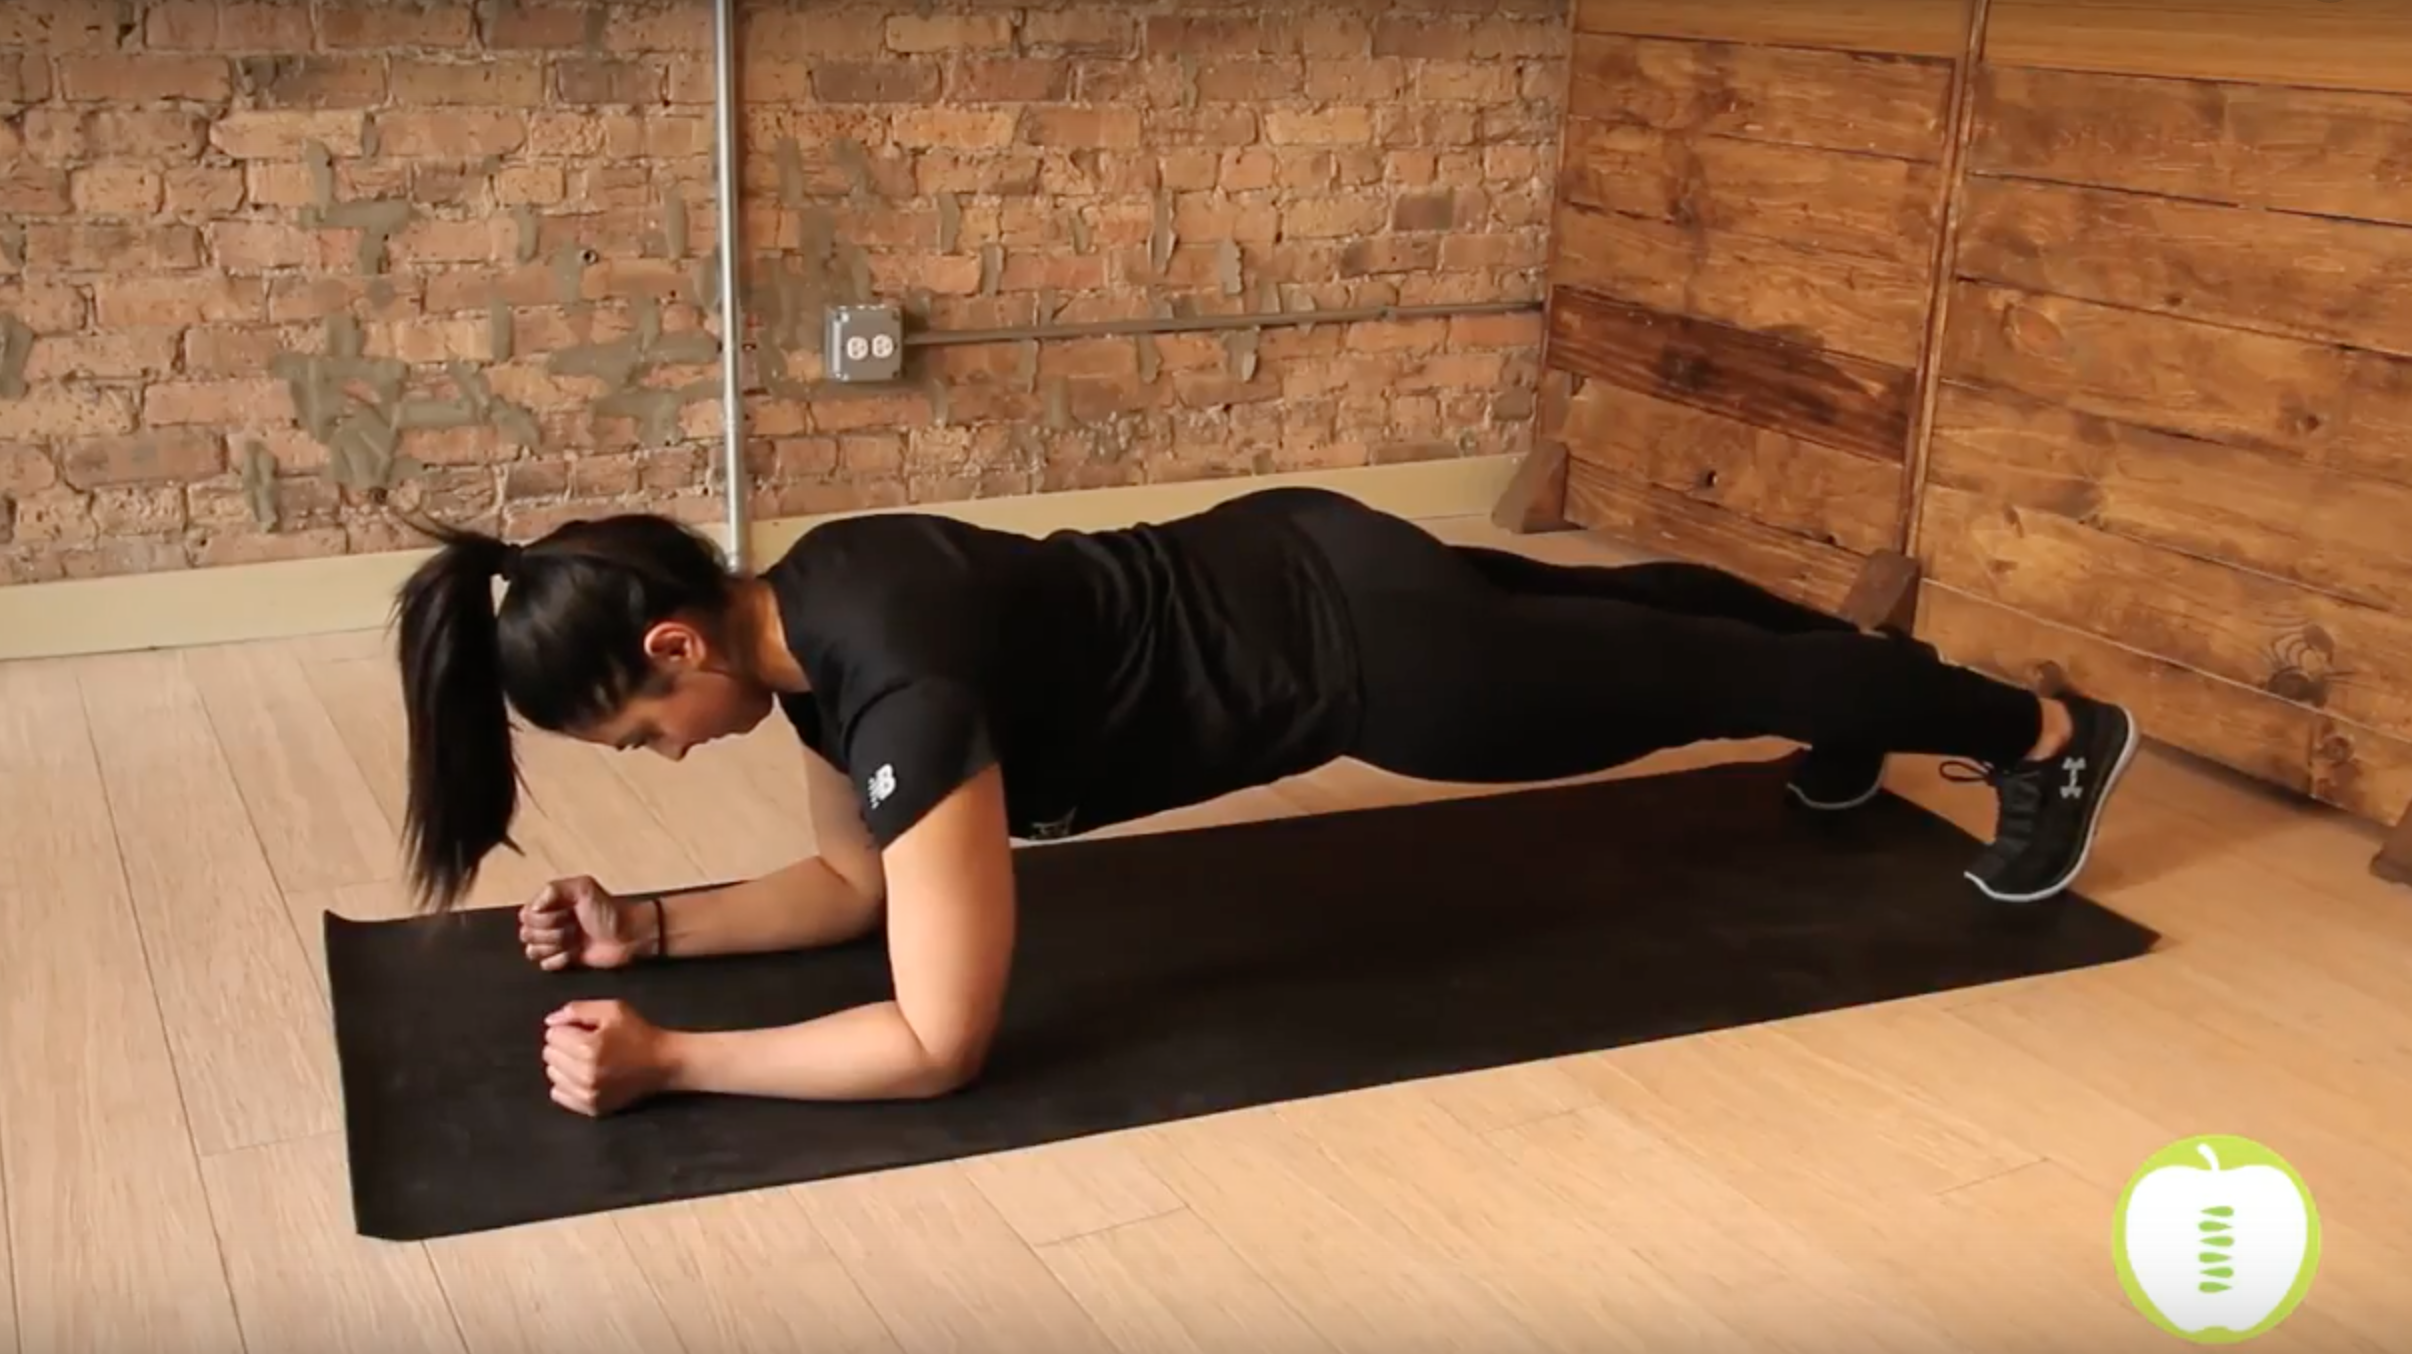 Plank Exercise Demo: Videos